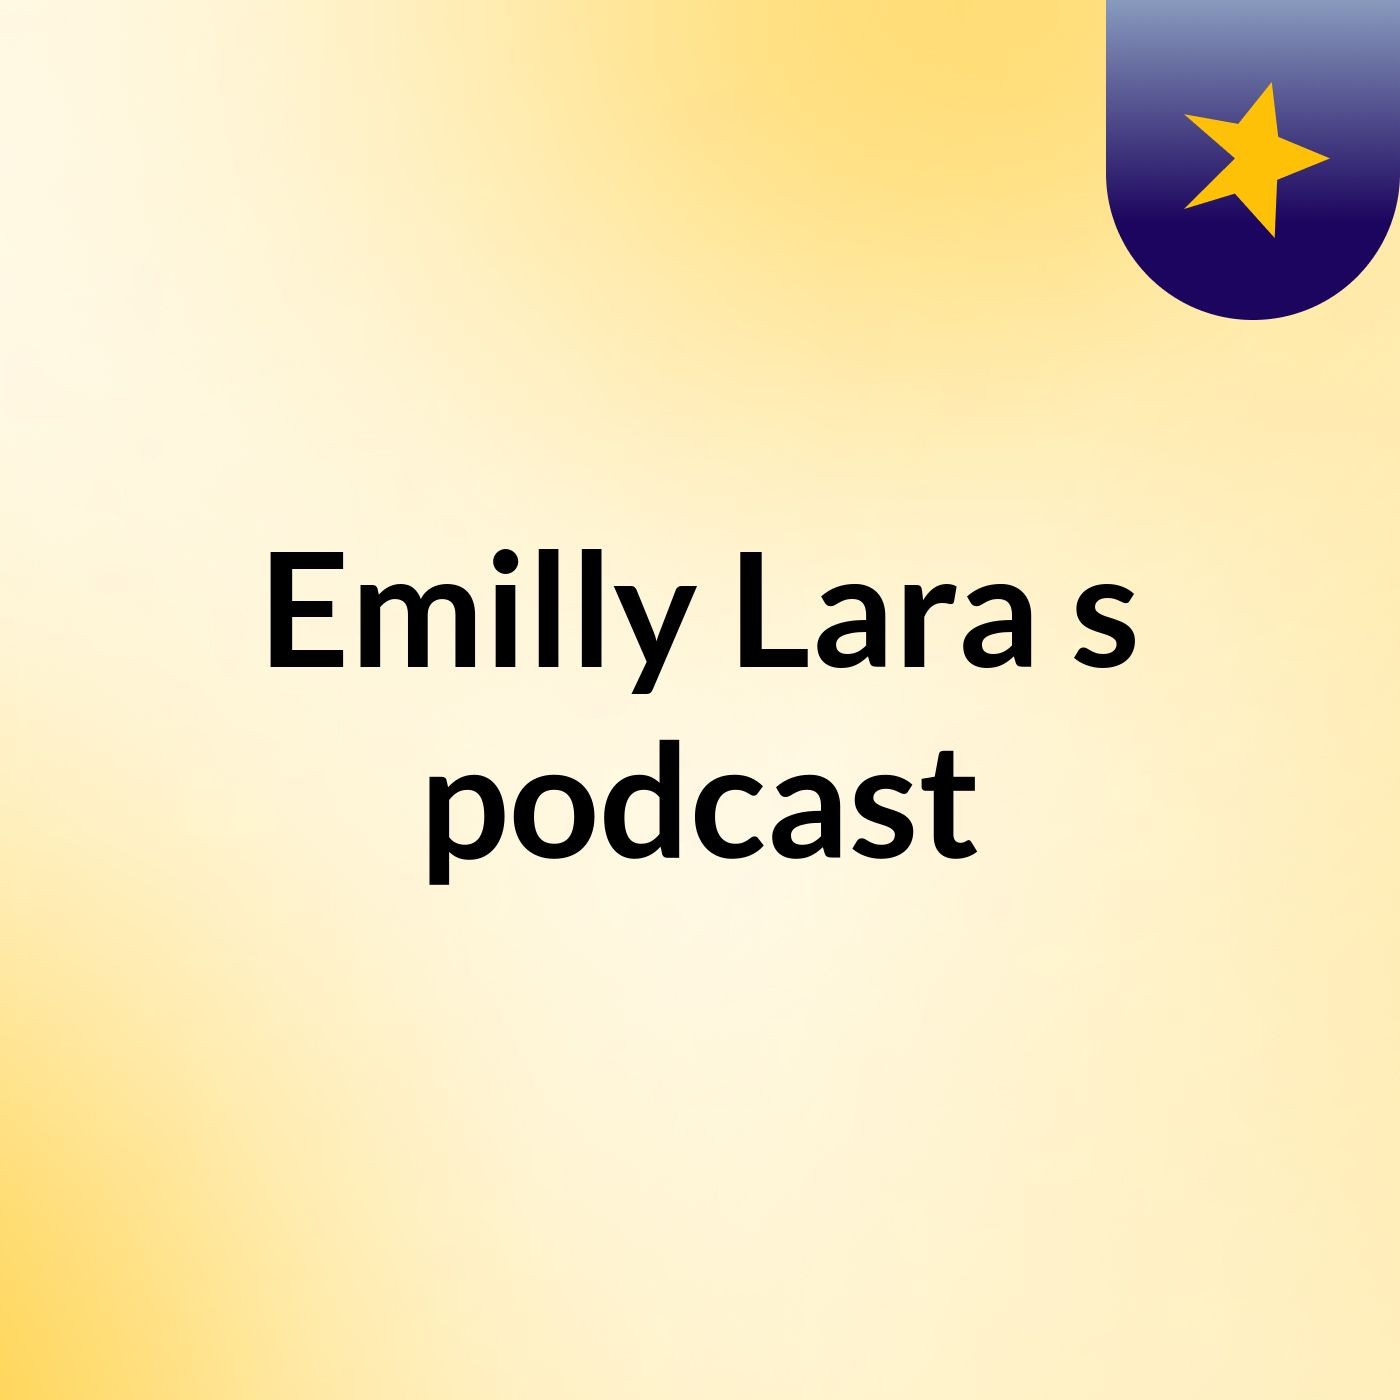 Emilly Lara's podcast